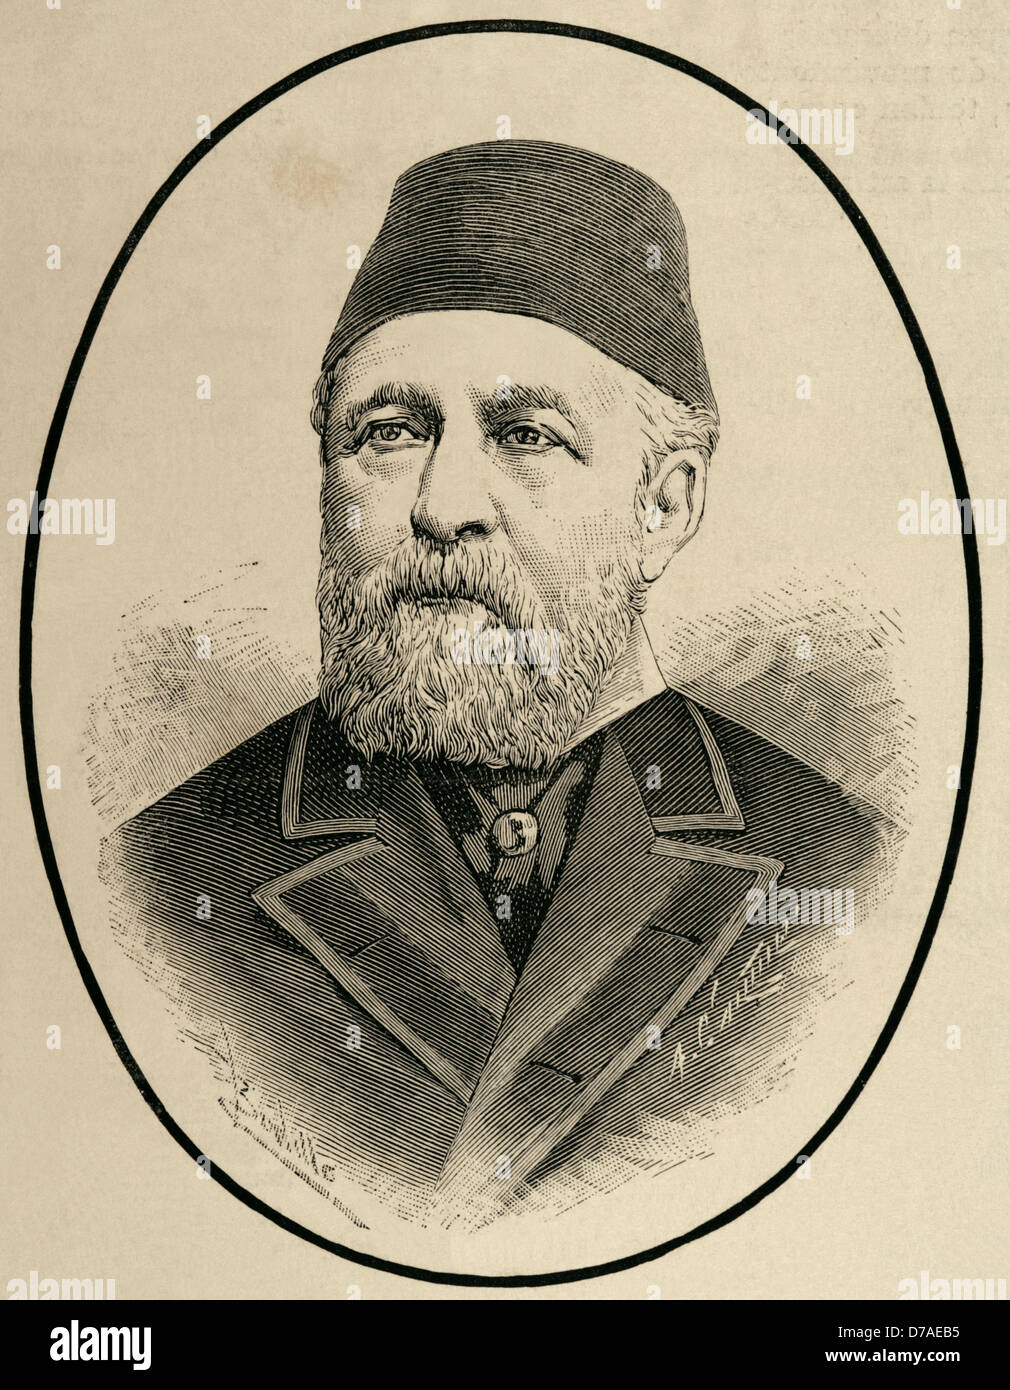 Hussein Sermed Affendi (1830-1886). Turkish diplomat. Engraving by Arturo Carretero y Sanchez (1852-1903). Stock Photo